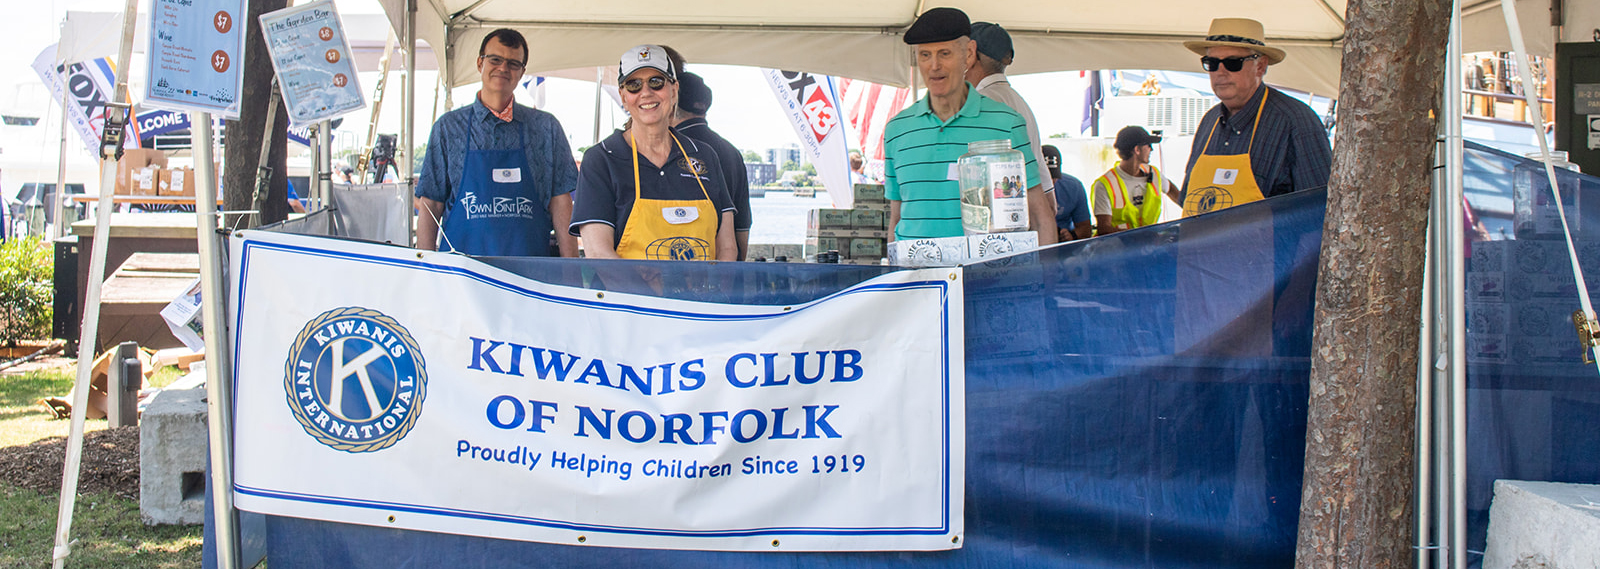 Kiwanis Club of Norfolk, VA